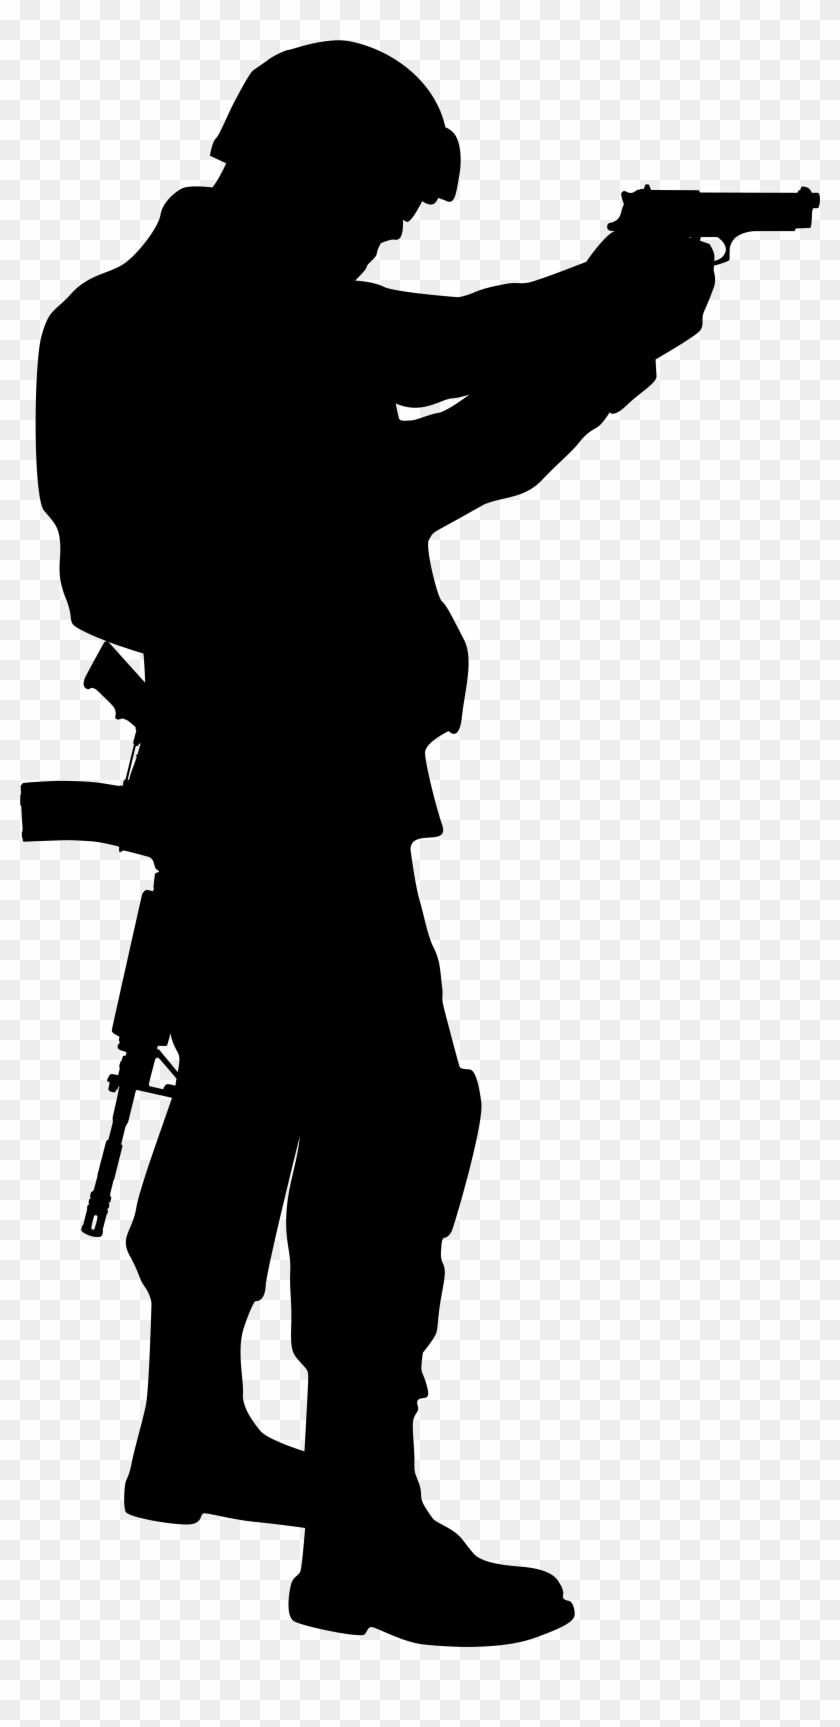 Soldier Silhouette Clip Art Image - Soldier Silhouette Png, Transparent ...